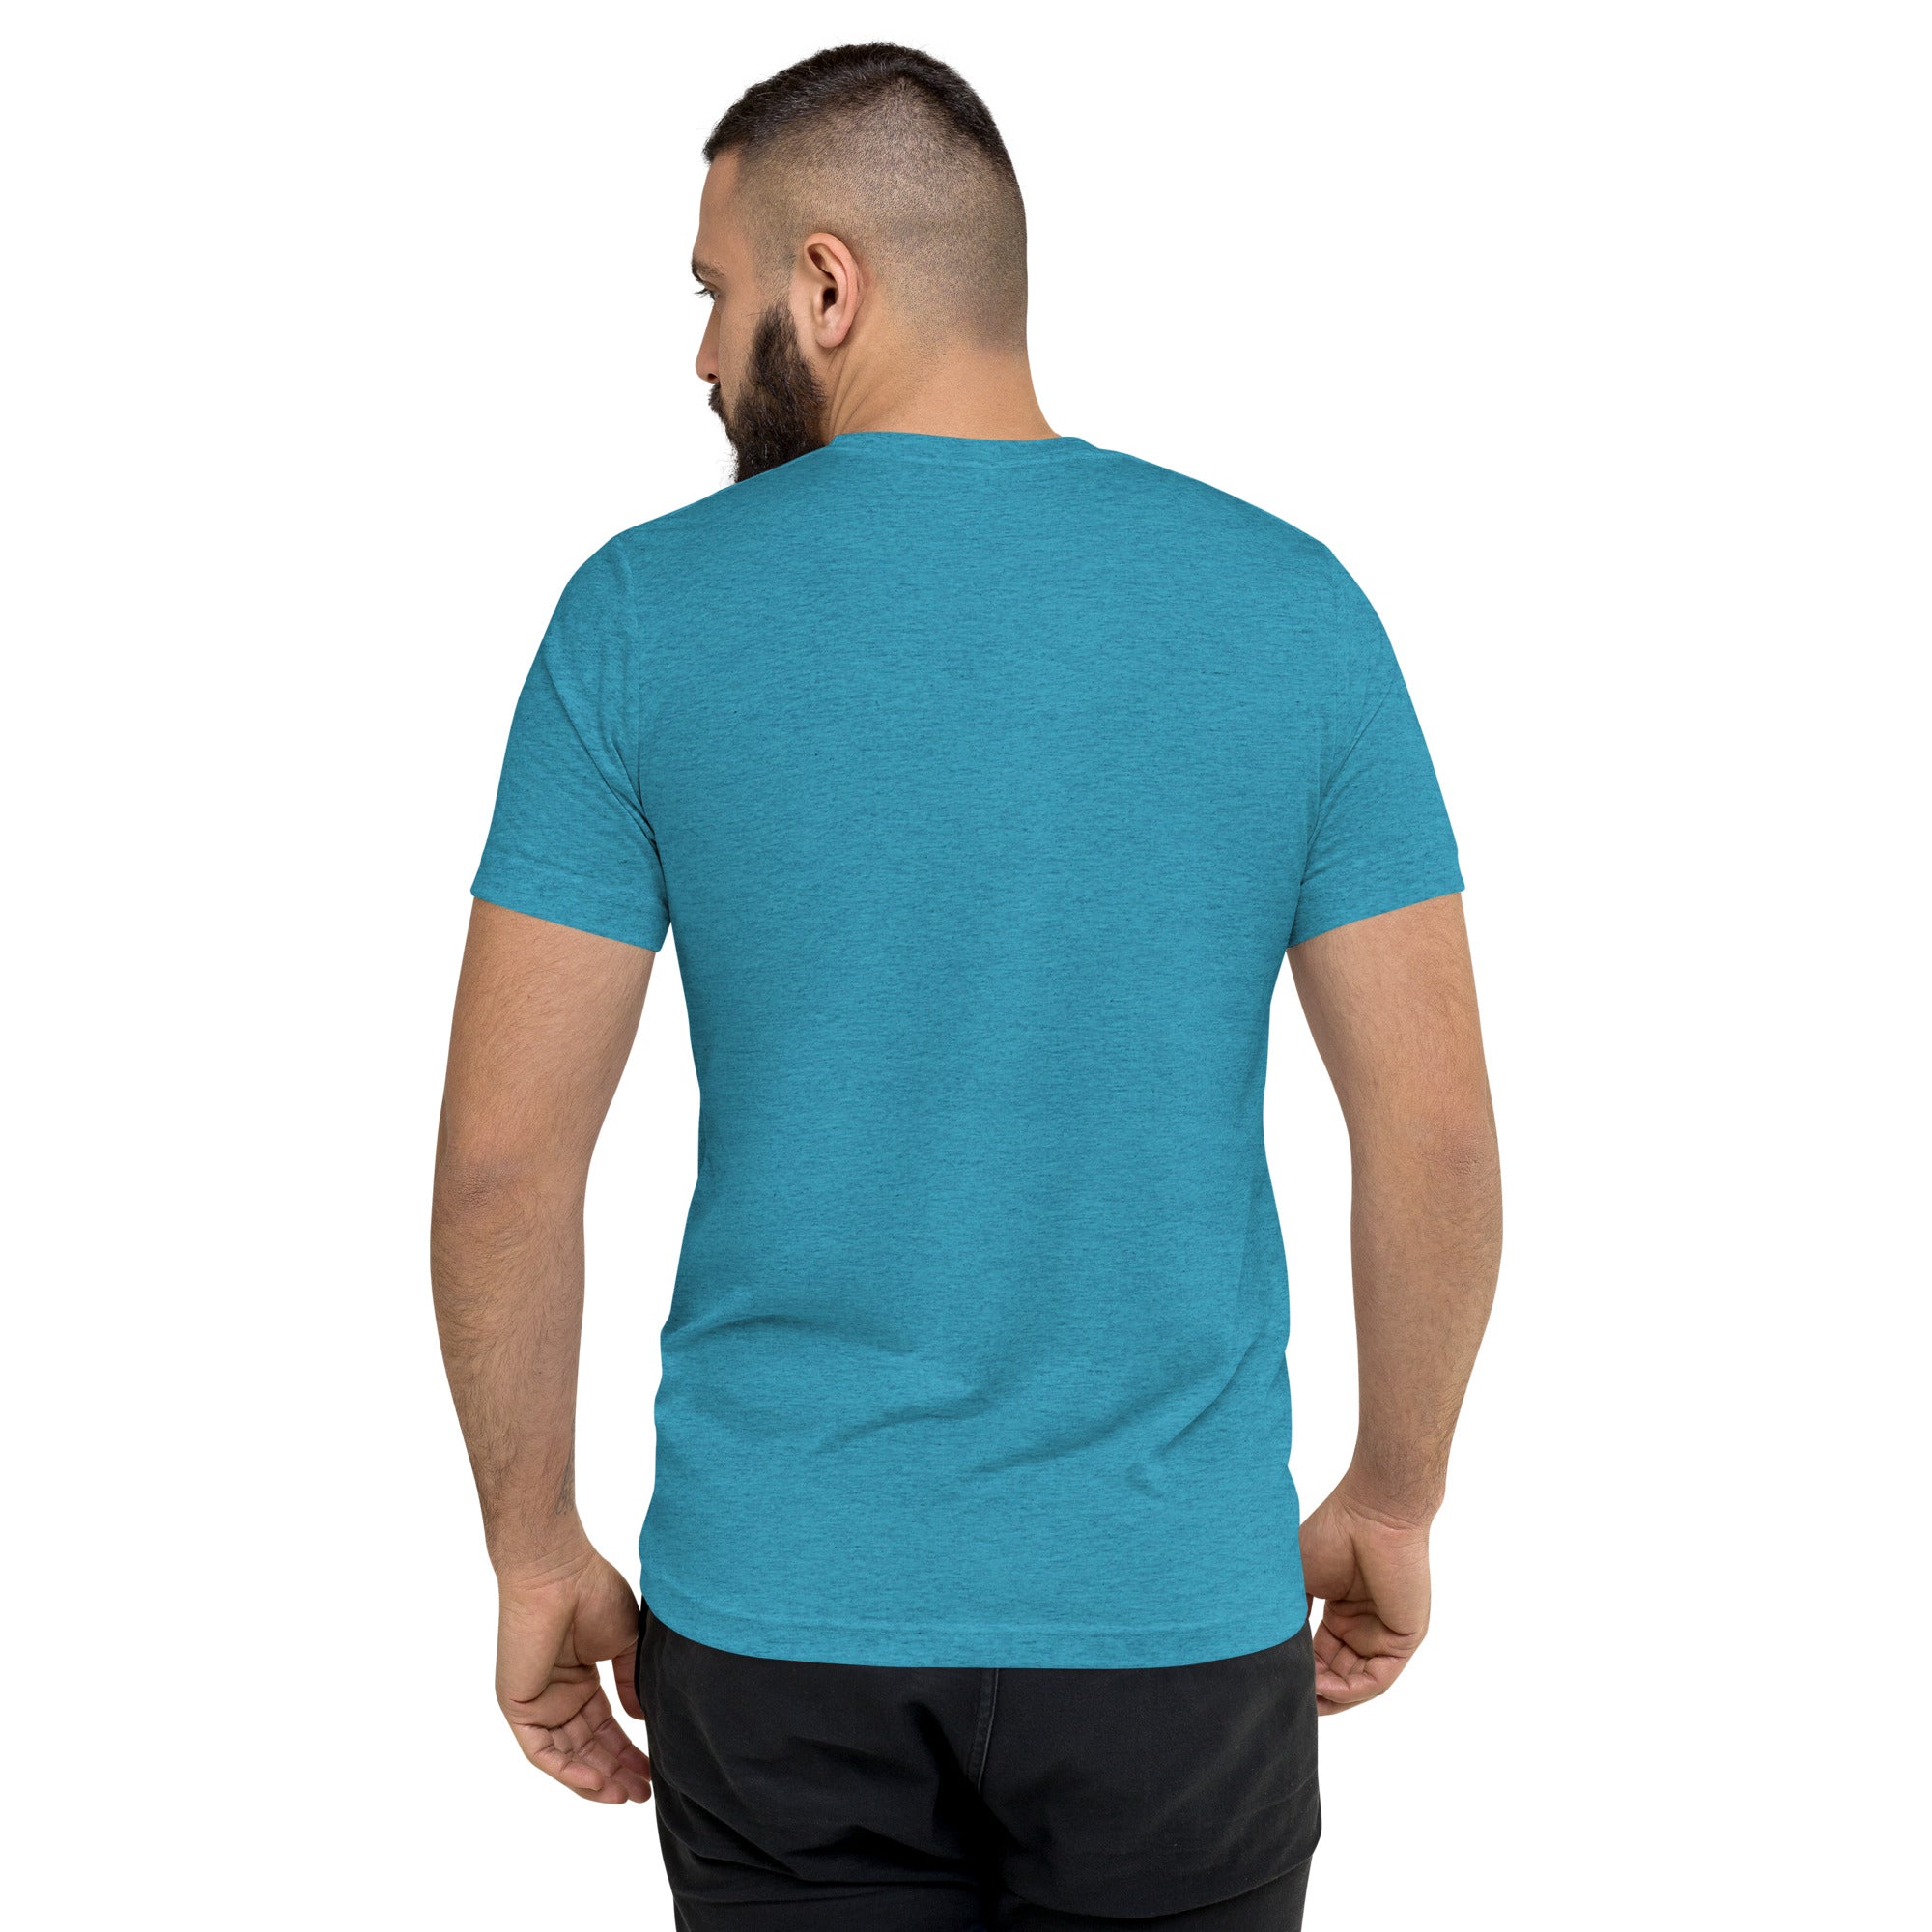 Aqua Spanish Fly Short Sleeve T-shirt